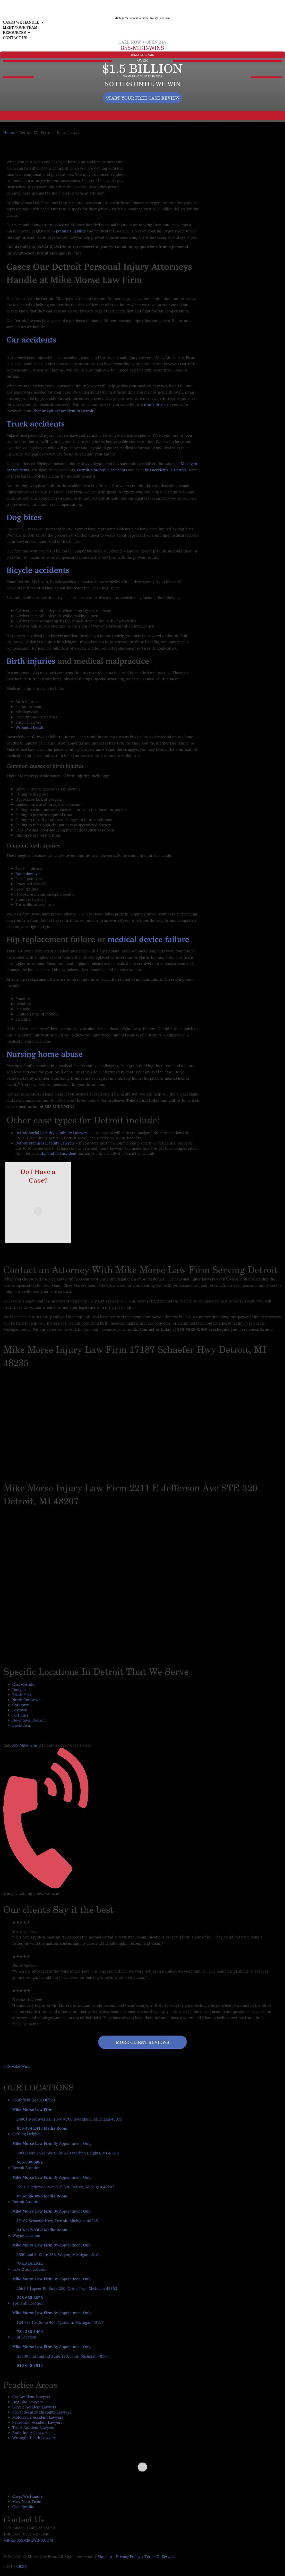 Mike Morse Injury Law Firm - Detroit MI Lawyers